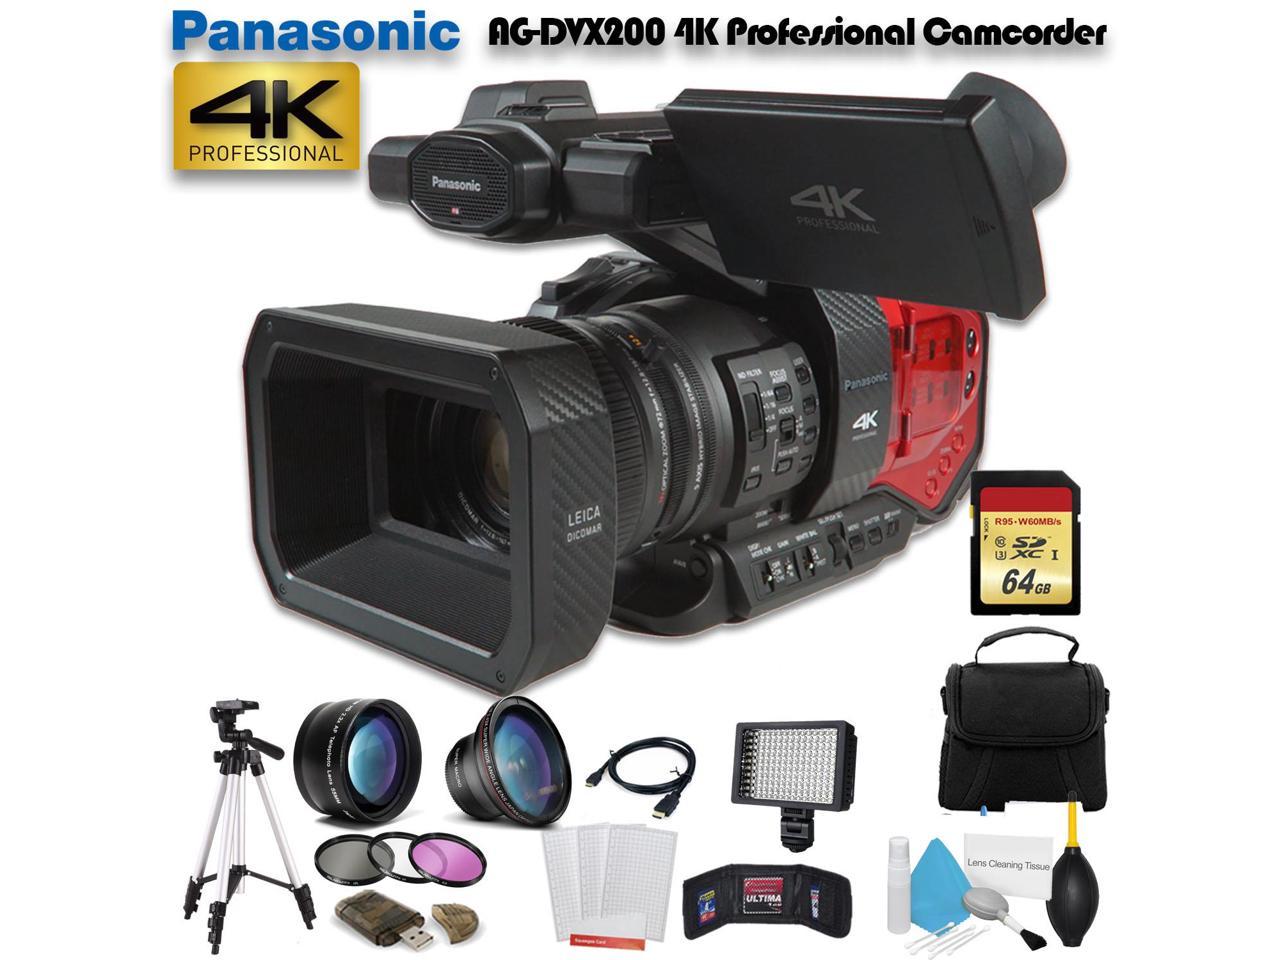 Panasonic AG-DVX200 4K Professional Camcorder W/ 64GB Memory Card, Bag, Tripod, Led Light and More